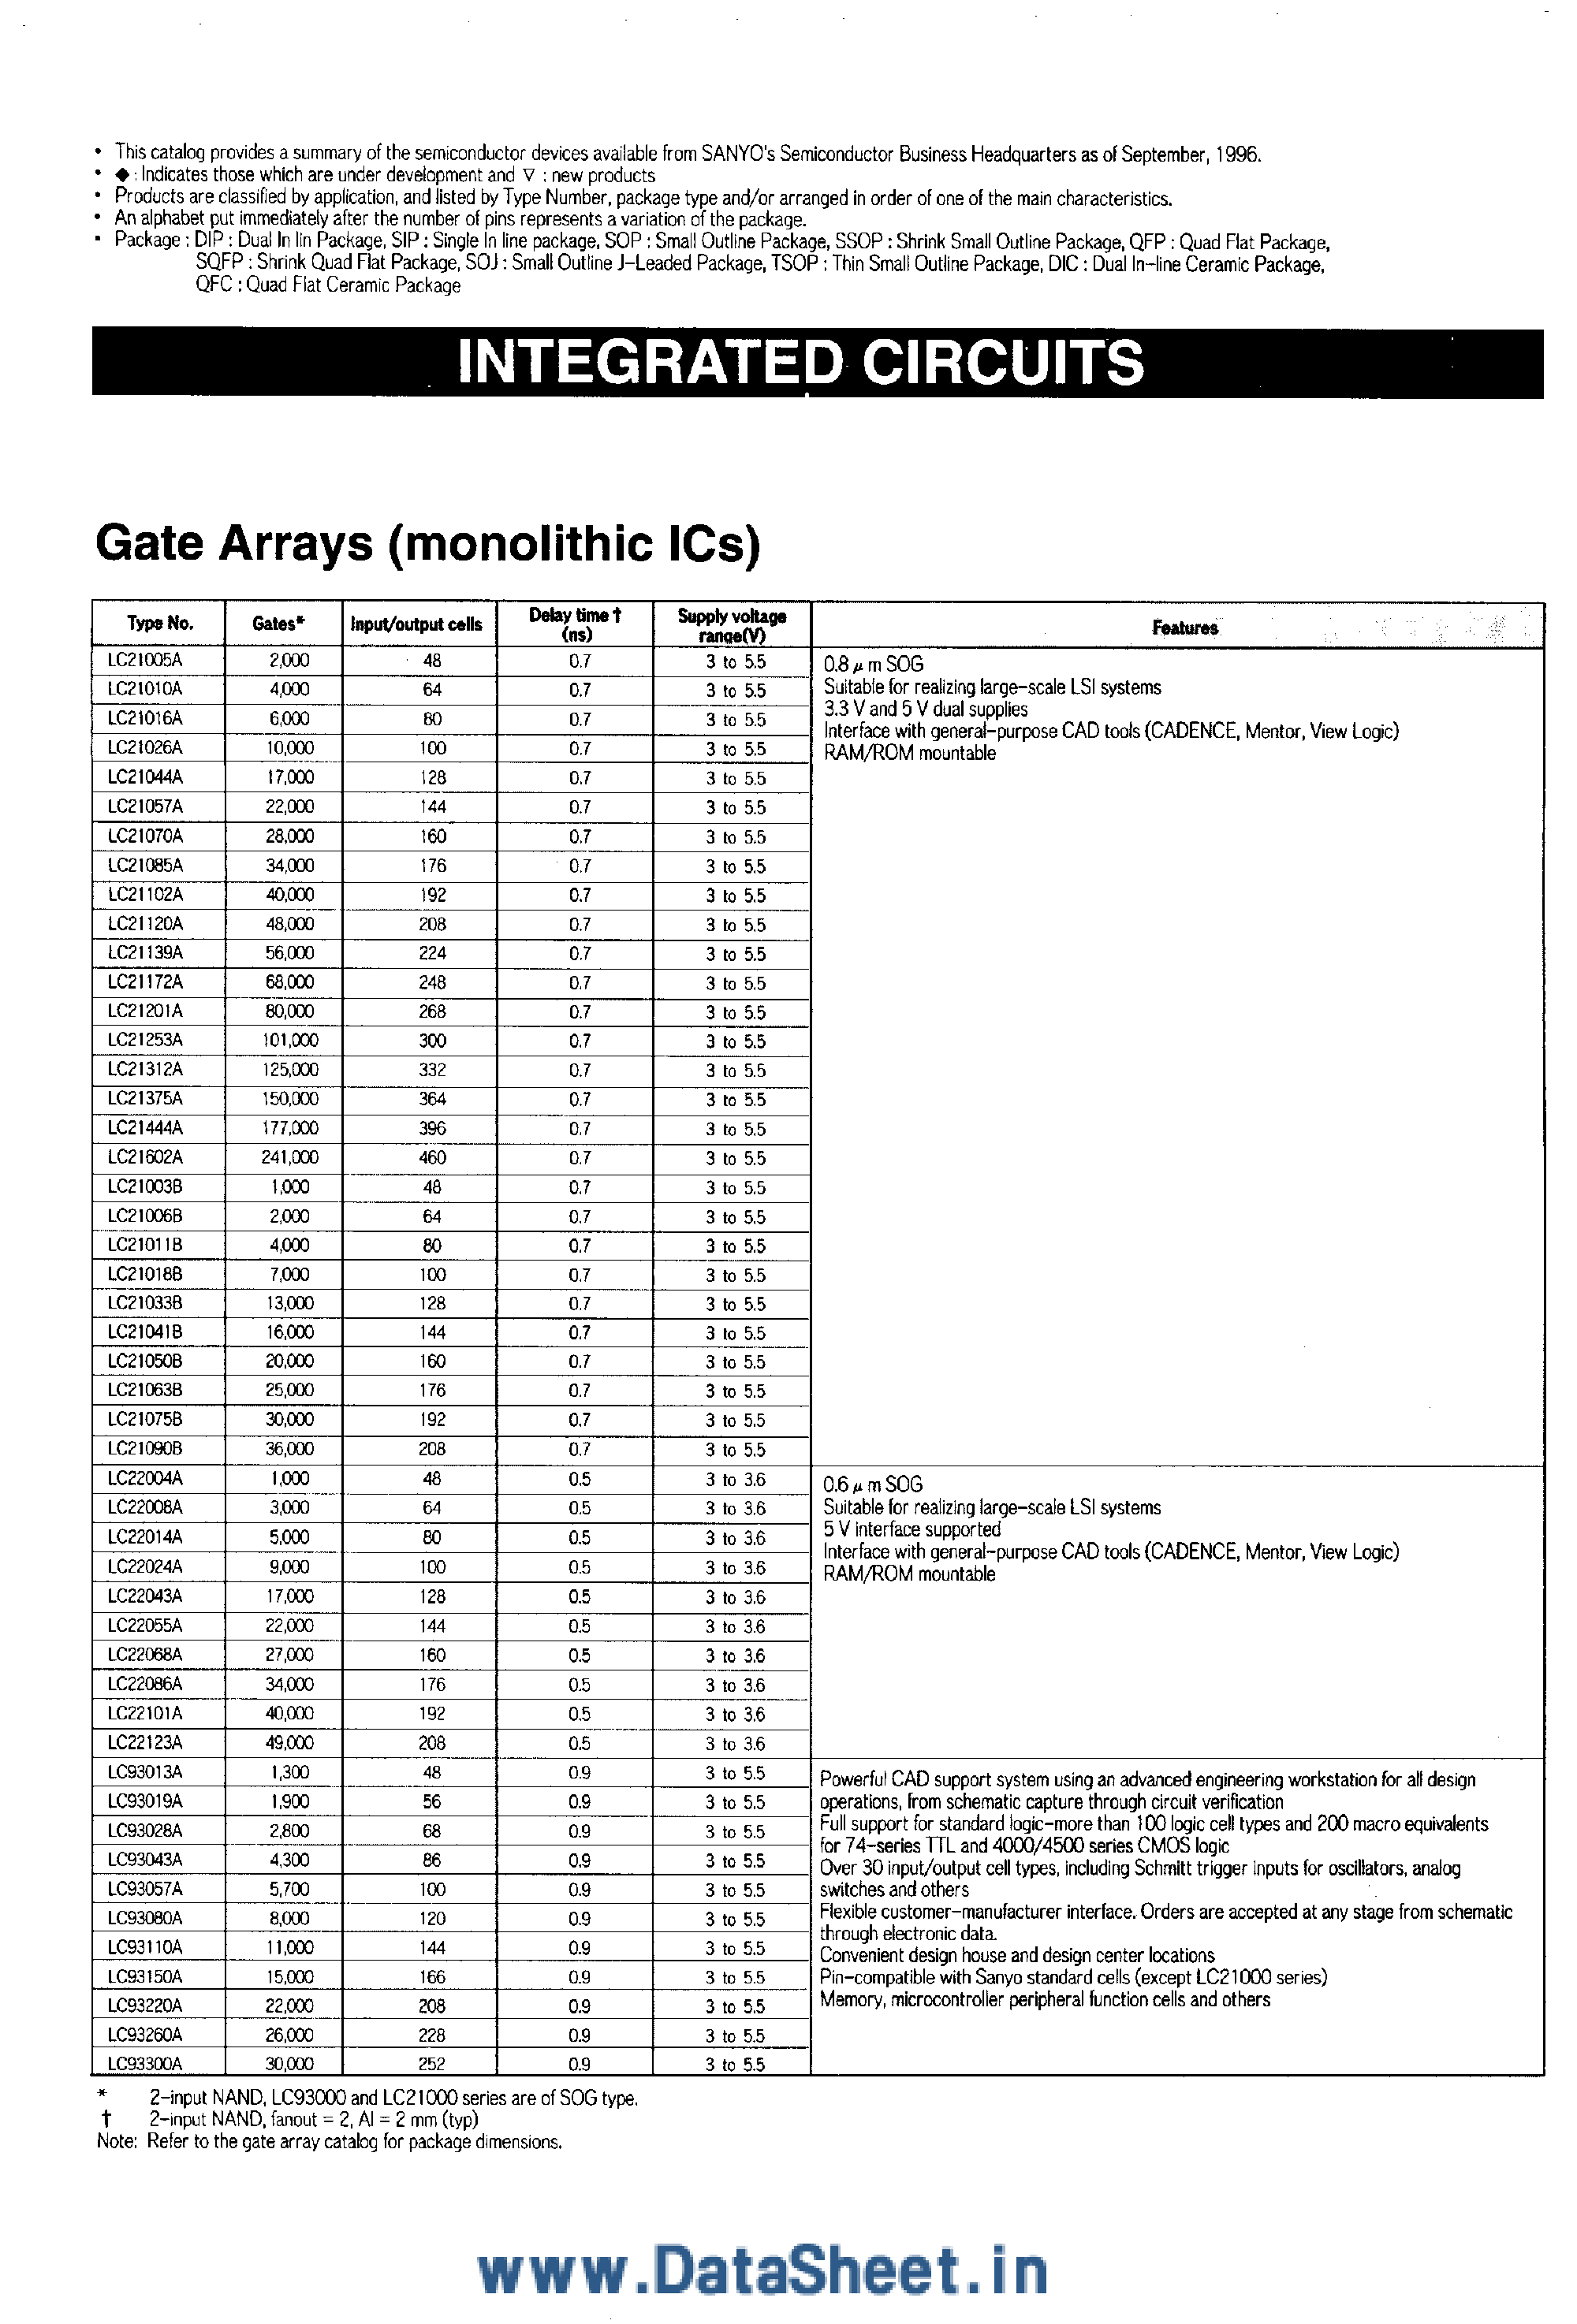 Даташит LC21003B-(LC21005A - LC22123A) Gate Arrays Monolithic ICs страница 1